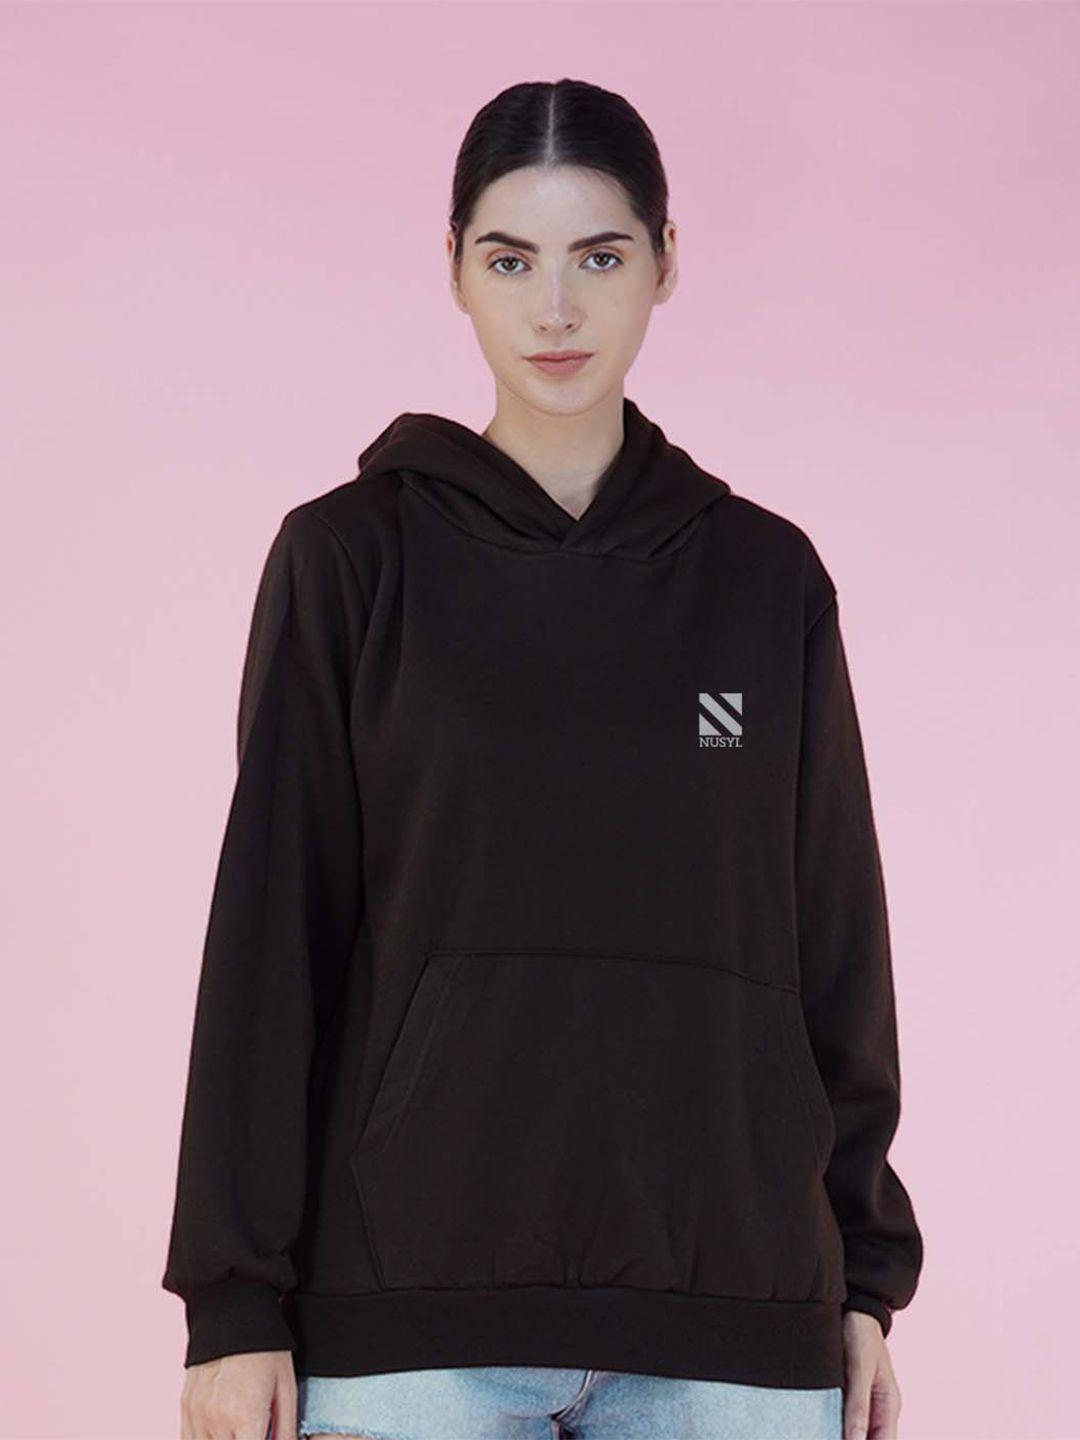 nusyl brand logo printed hooded oversized fleece pullover sweatshirt